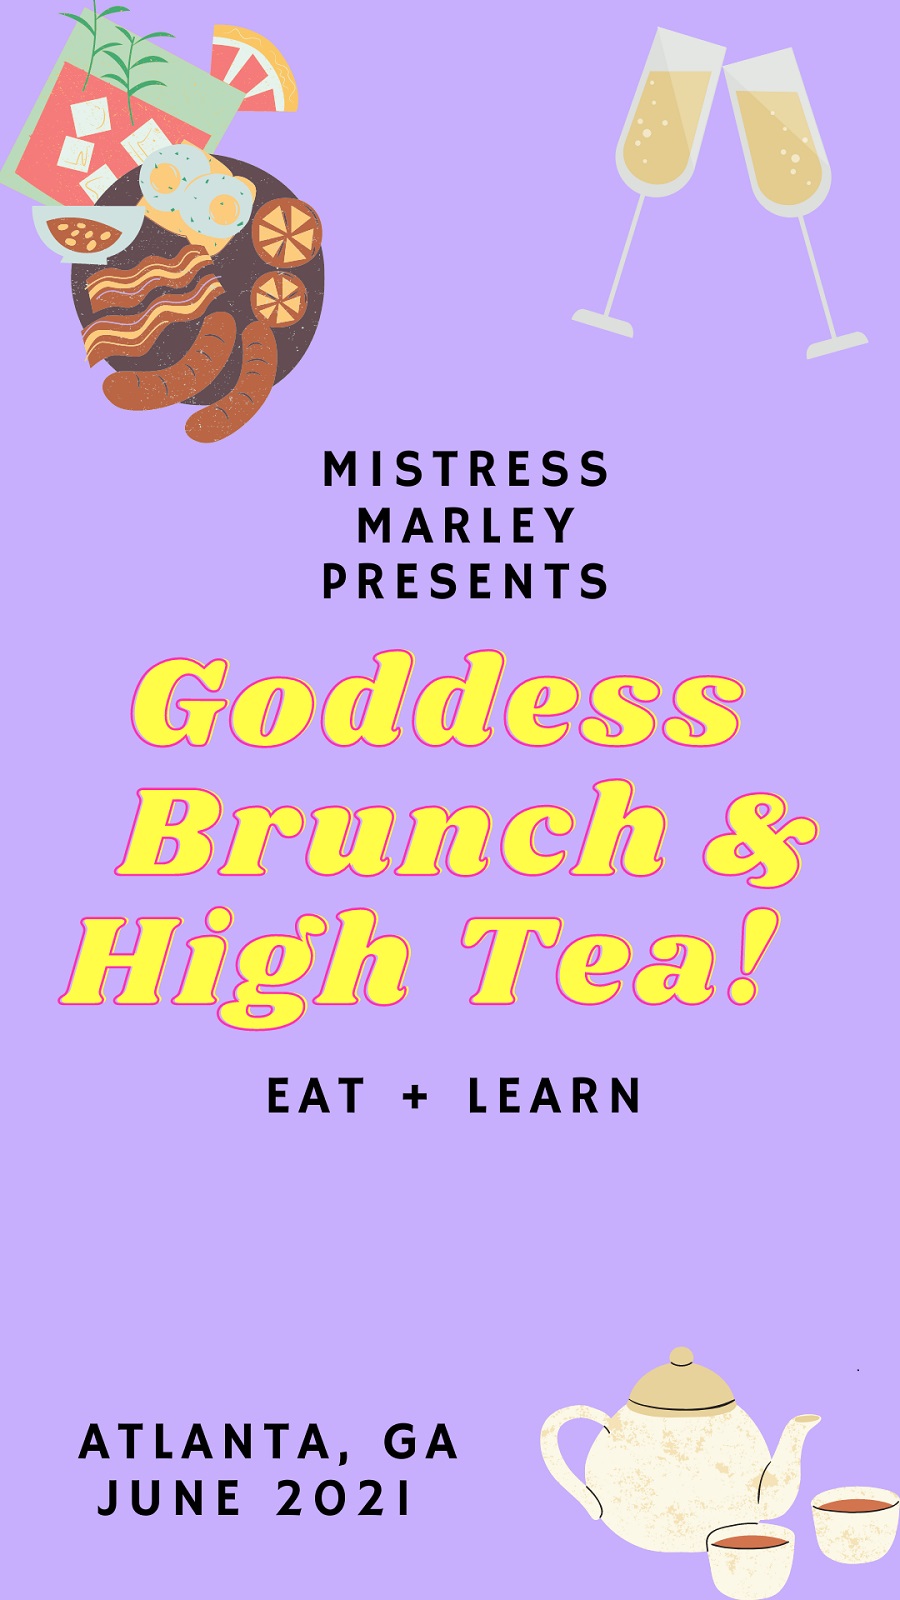 Mistress Marley Presents ‘Goddess Brunch & High Tea’ Events in Atlanta, NYC